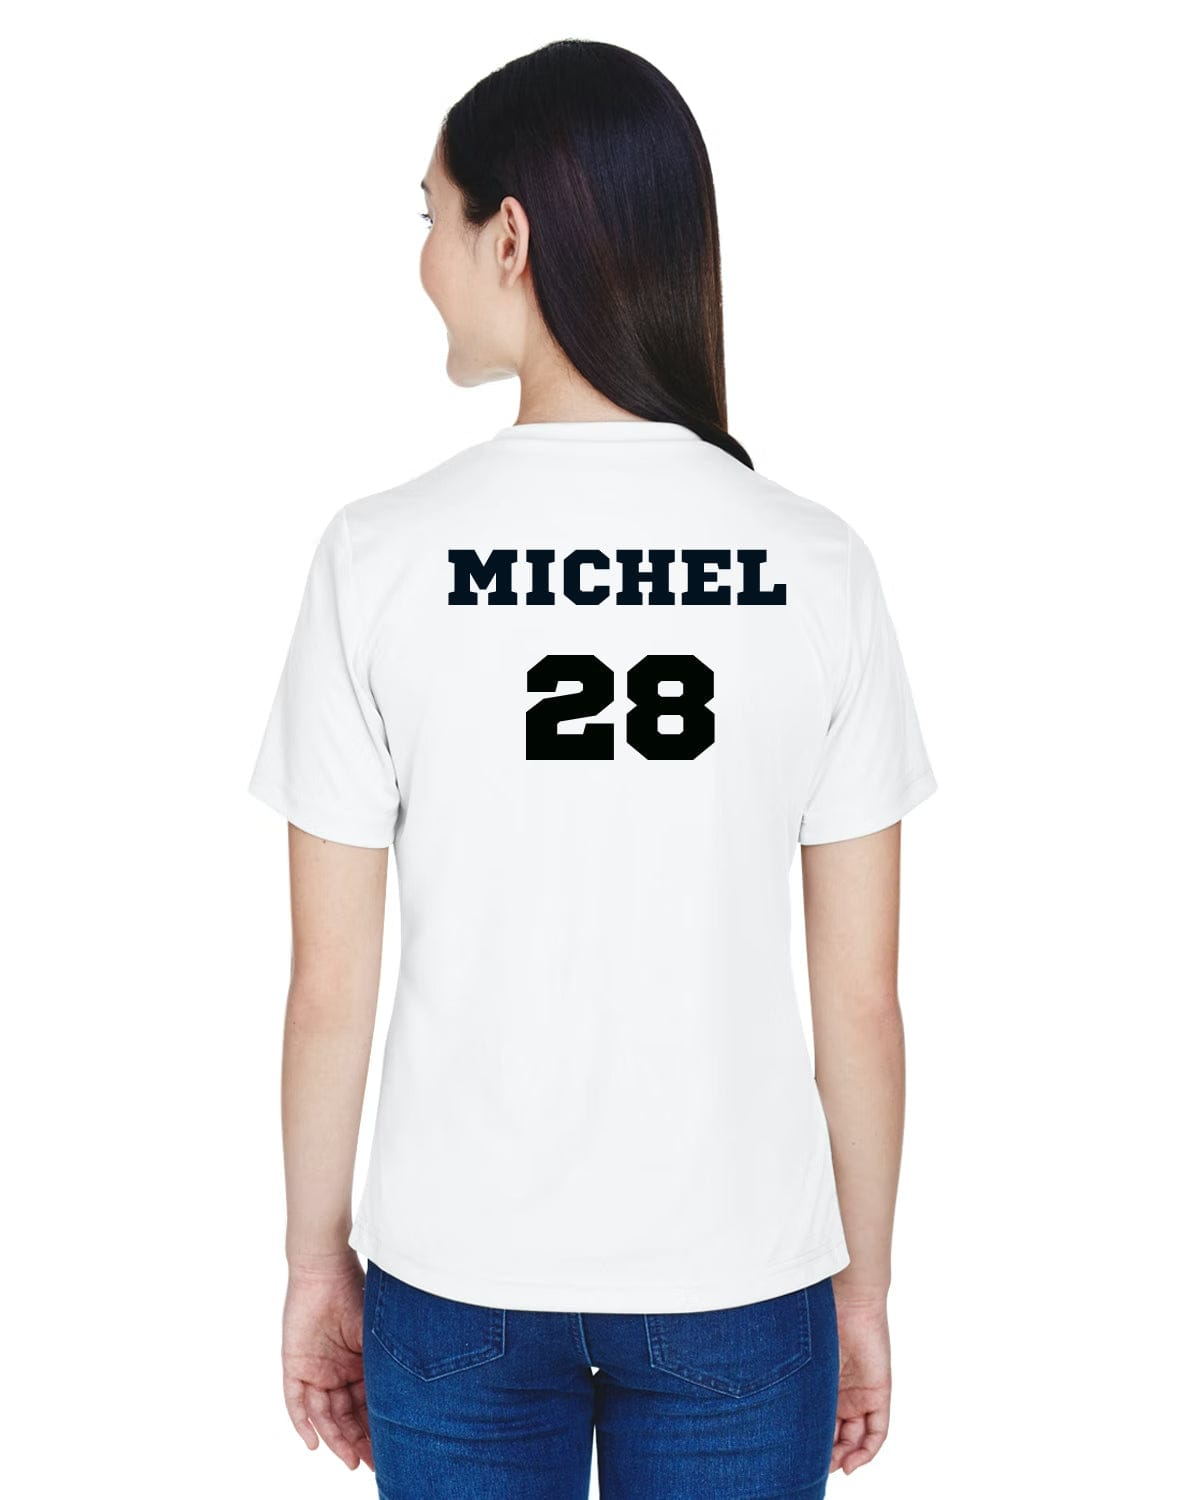 Gators 11/12 Women's V-Neck Sublimated Football Shirt